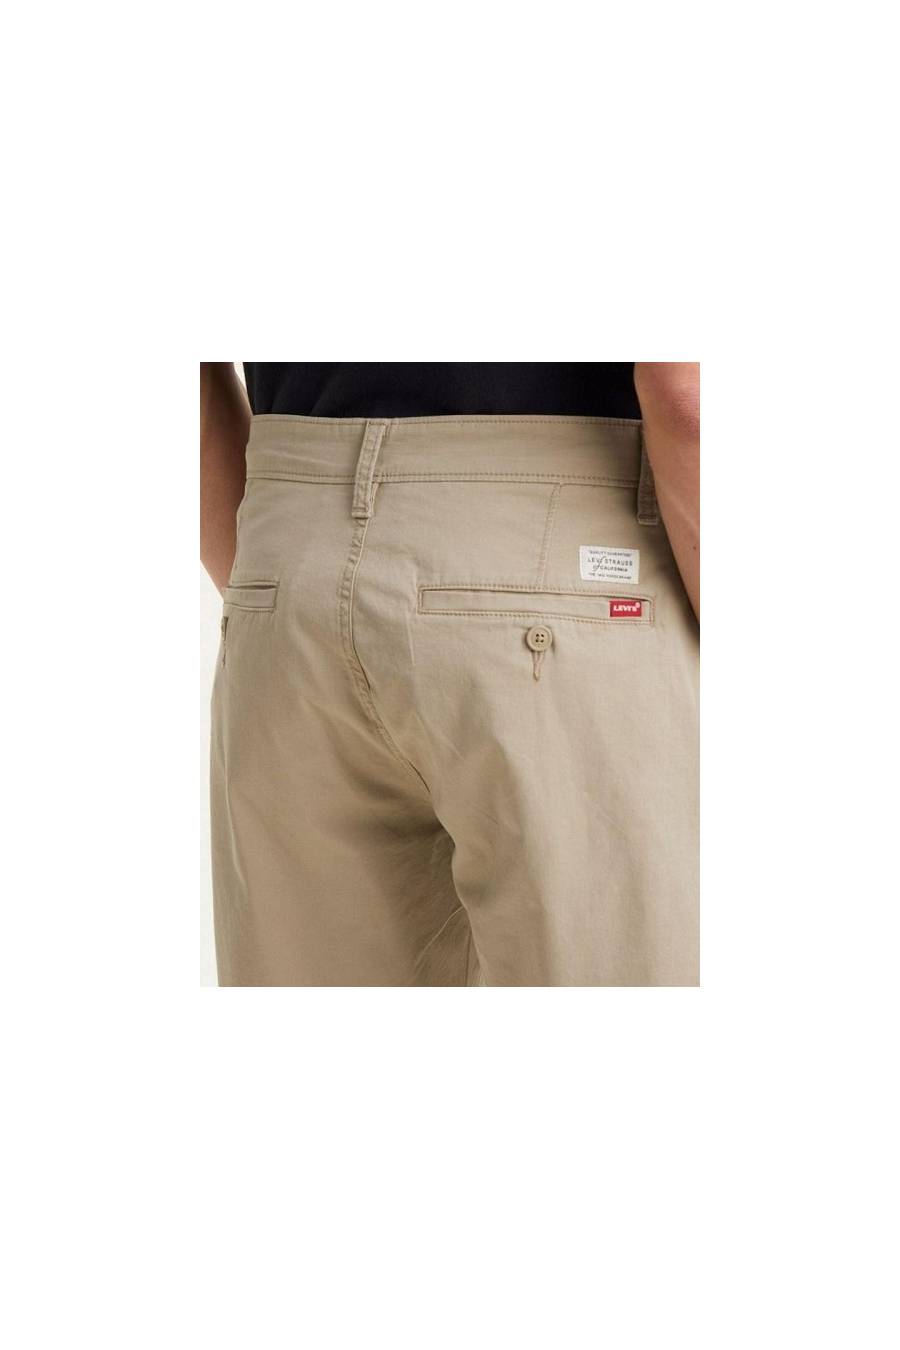 Levi's Chino Taper - Shorts para Hombre